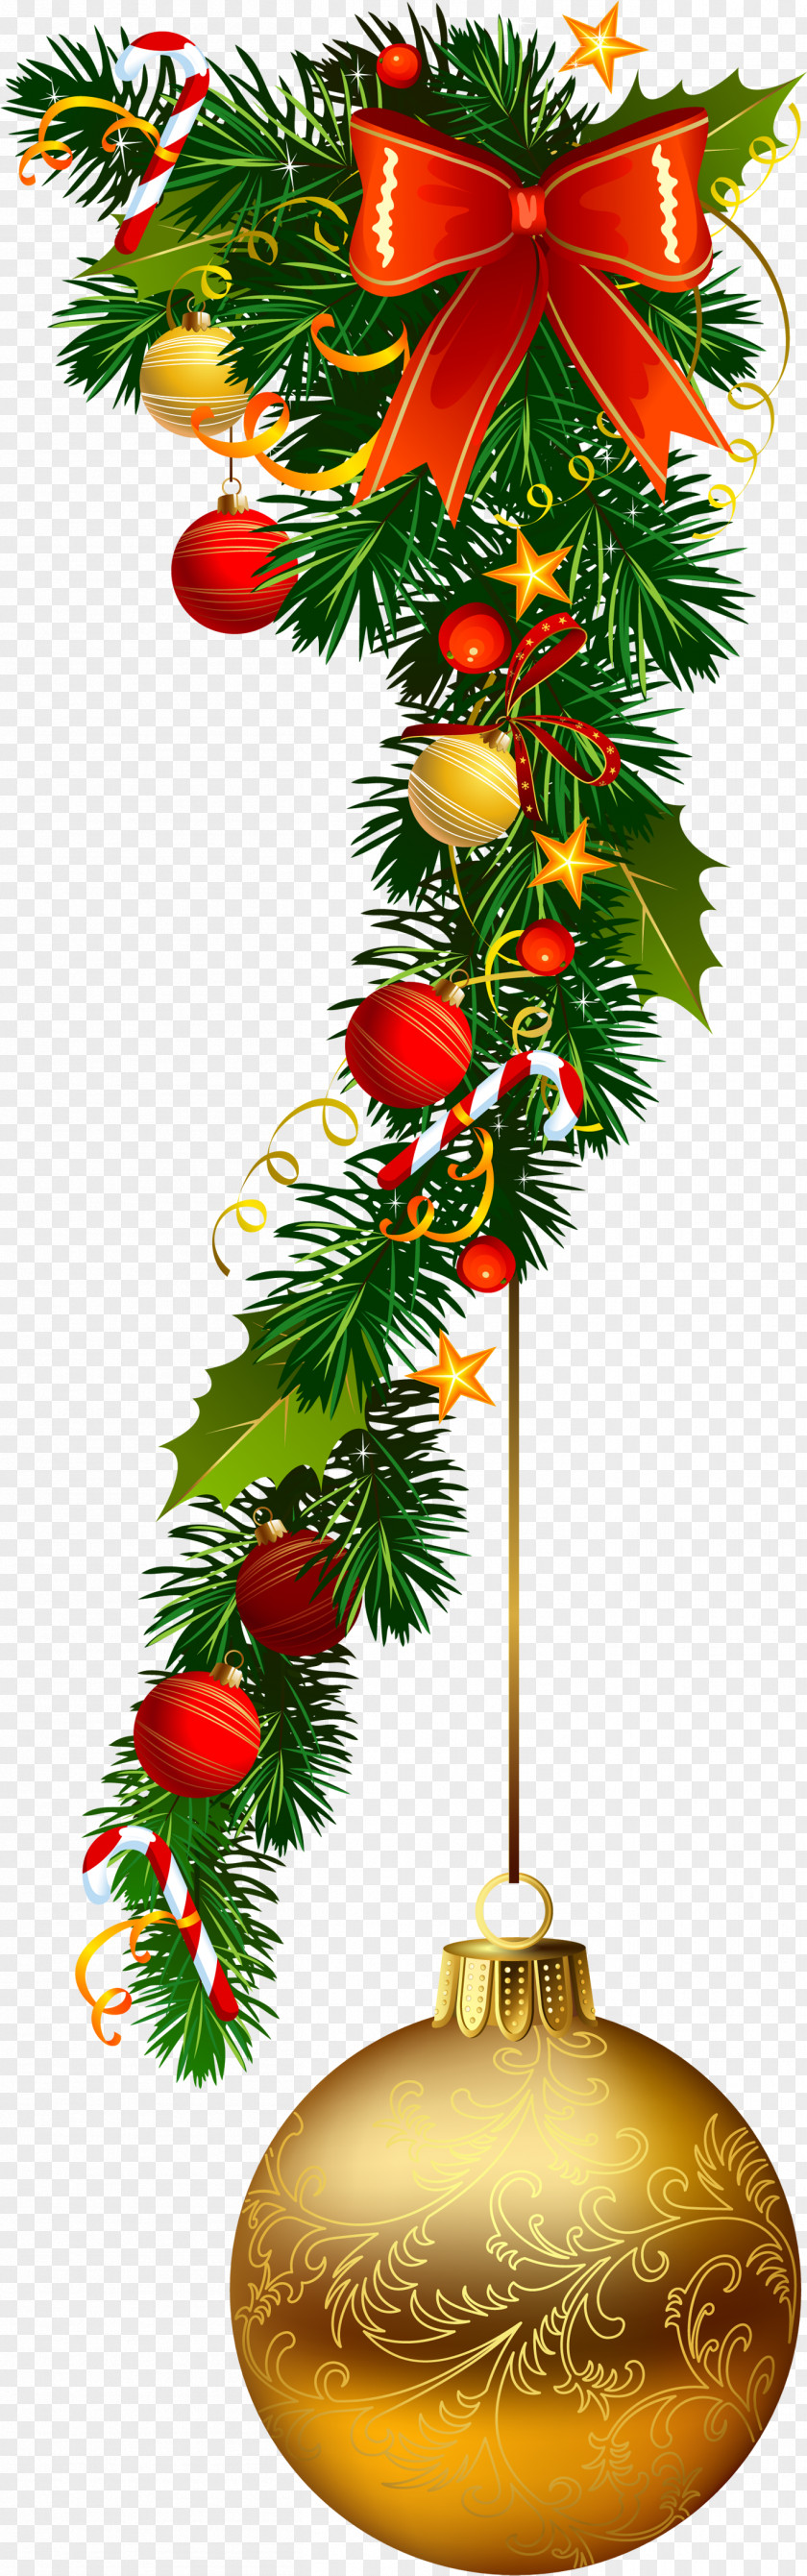 Christmas Santa Claus Ornament Decoration Garland PNG